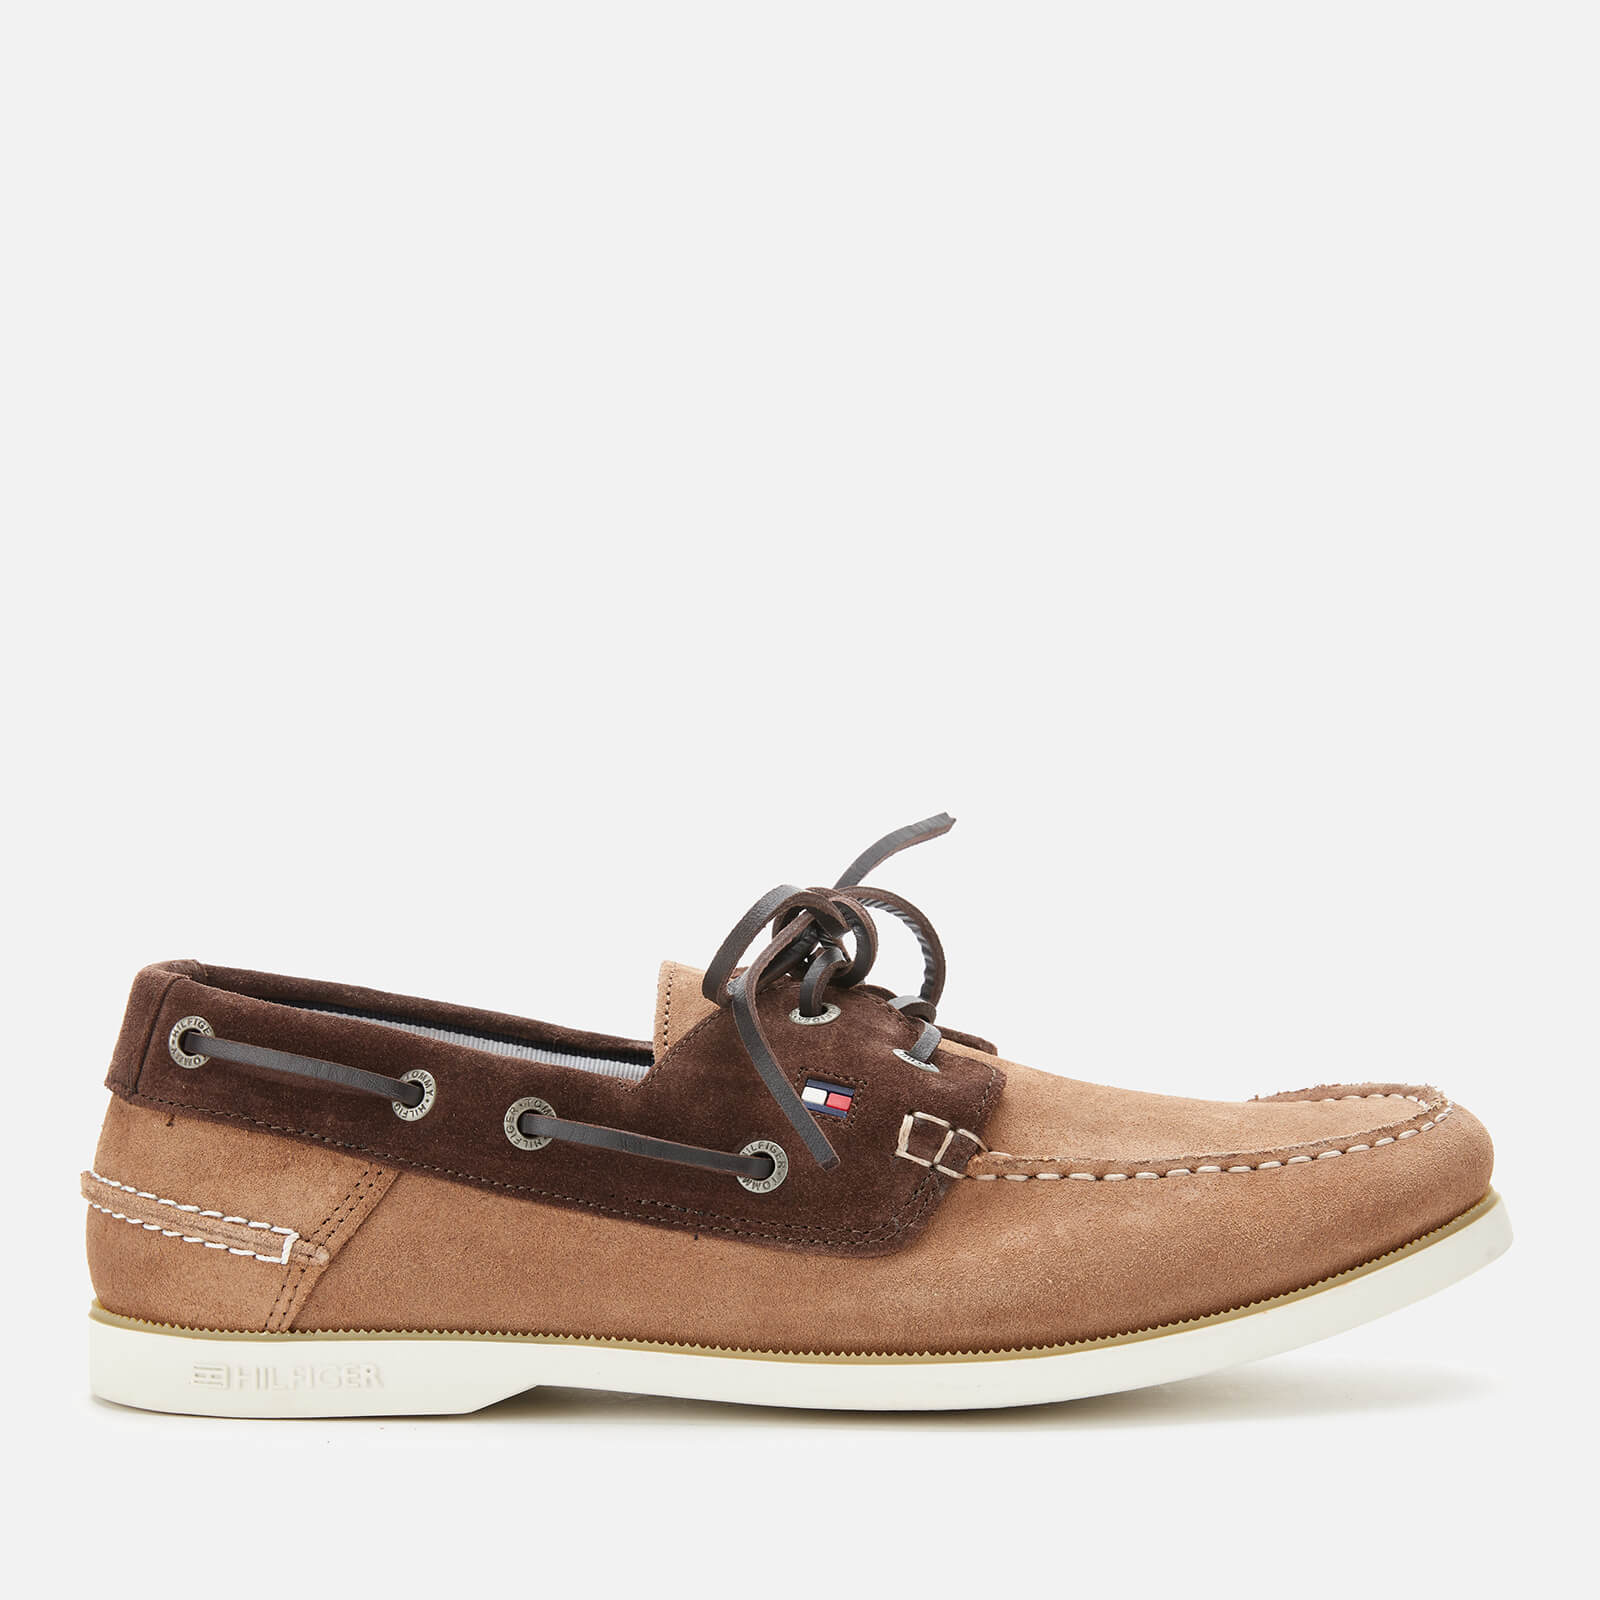 hilfiger boat shoes